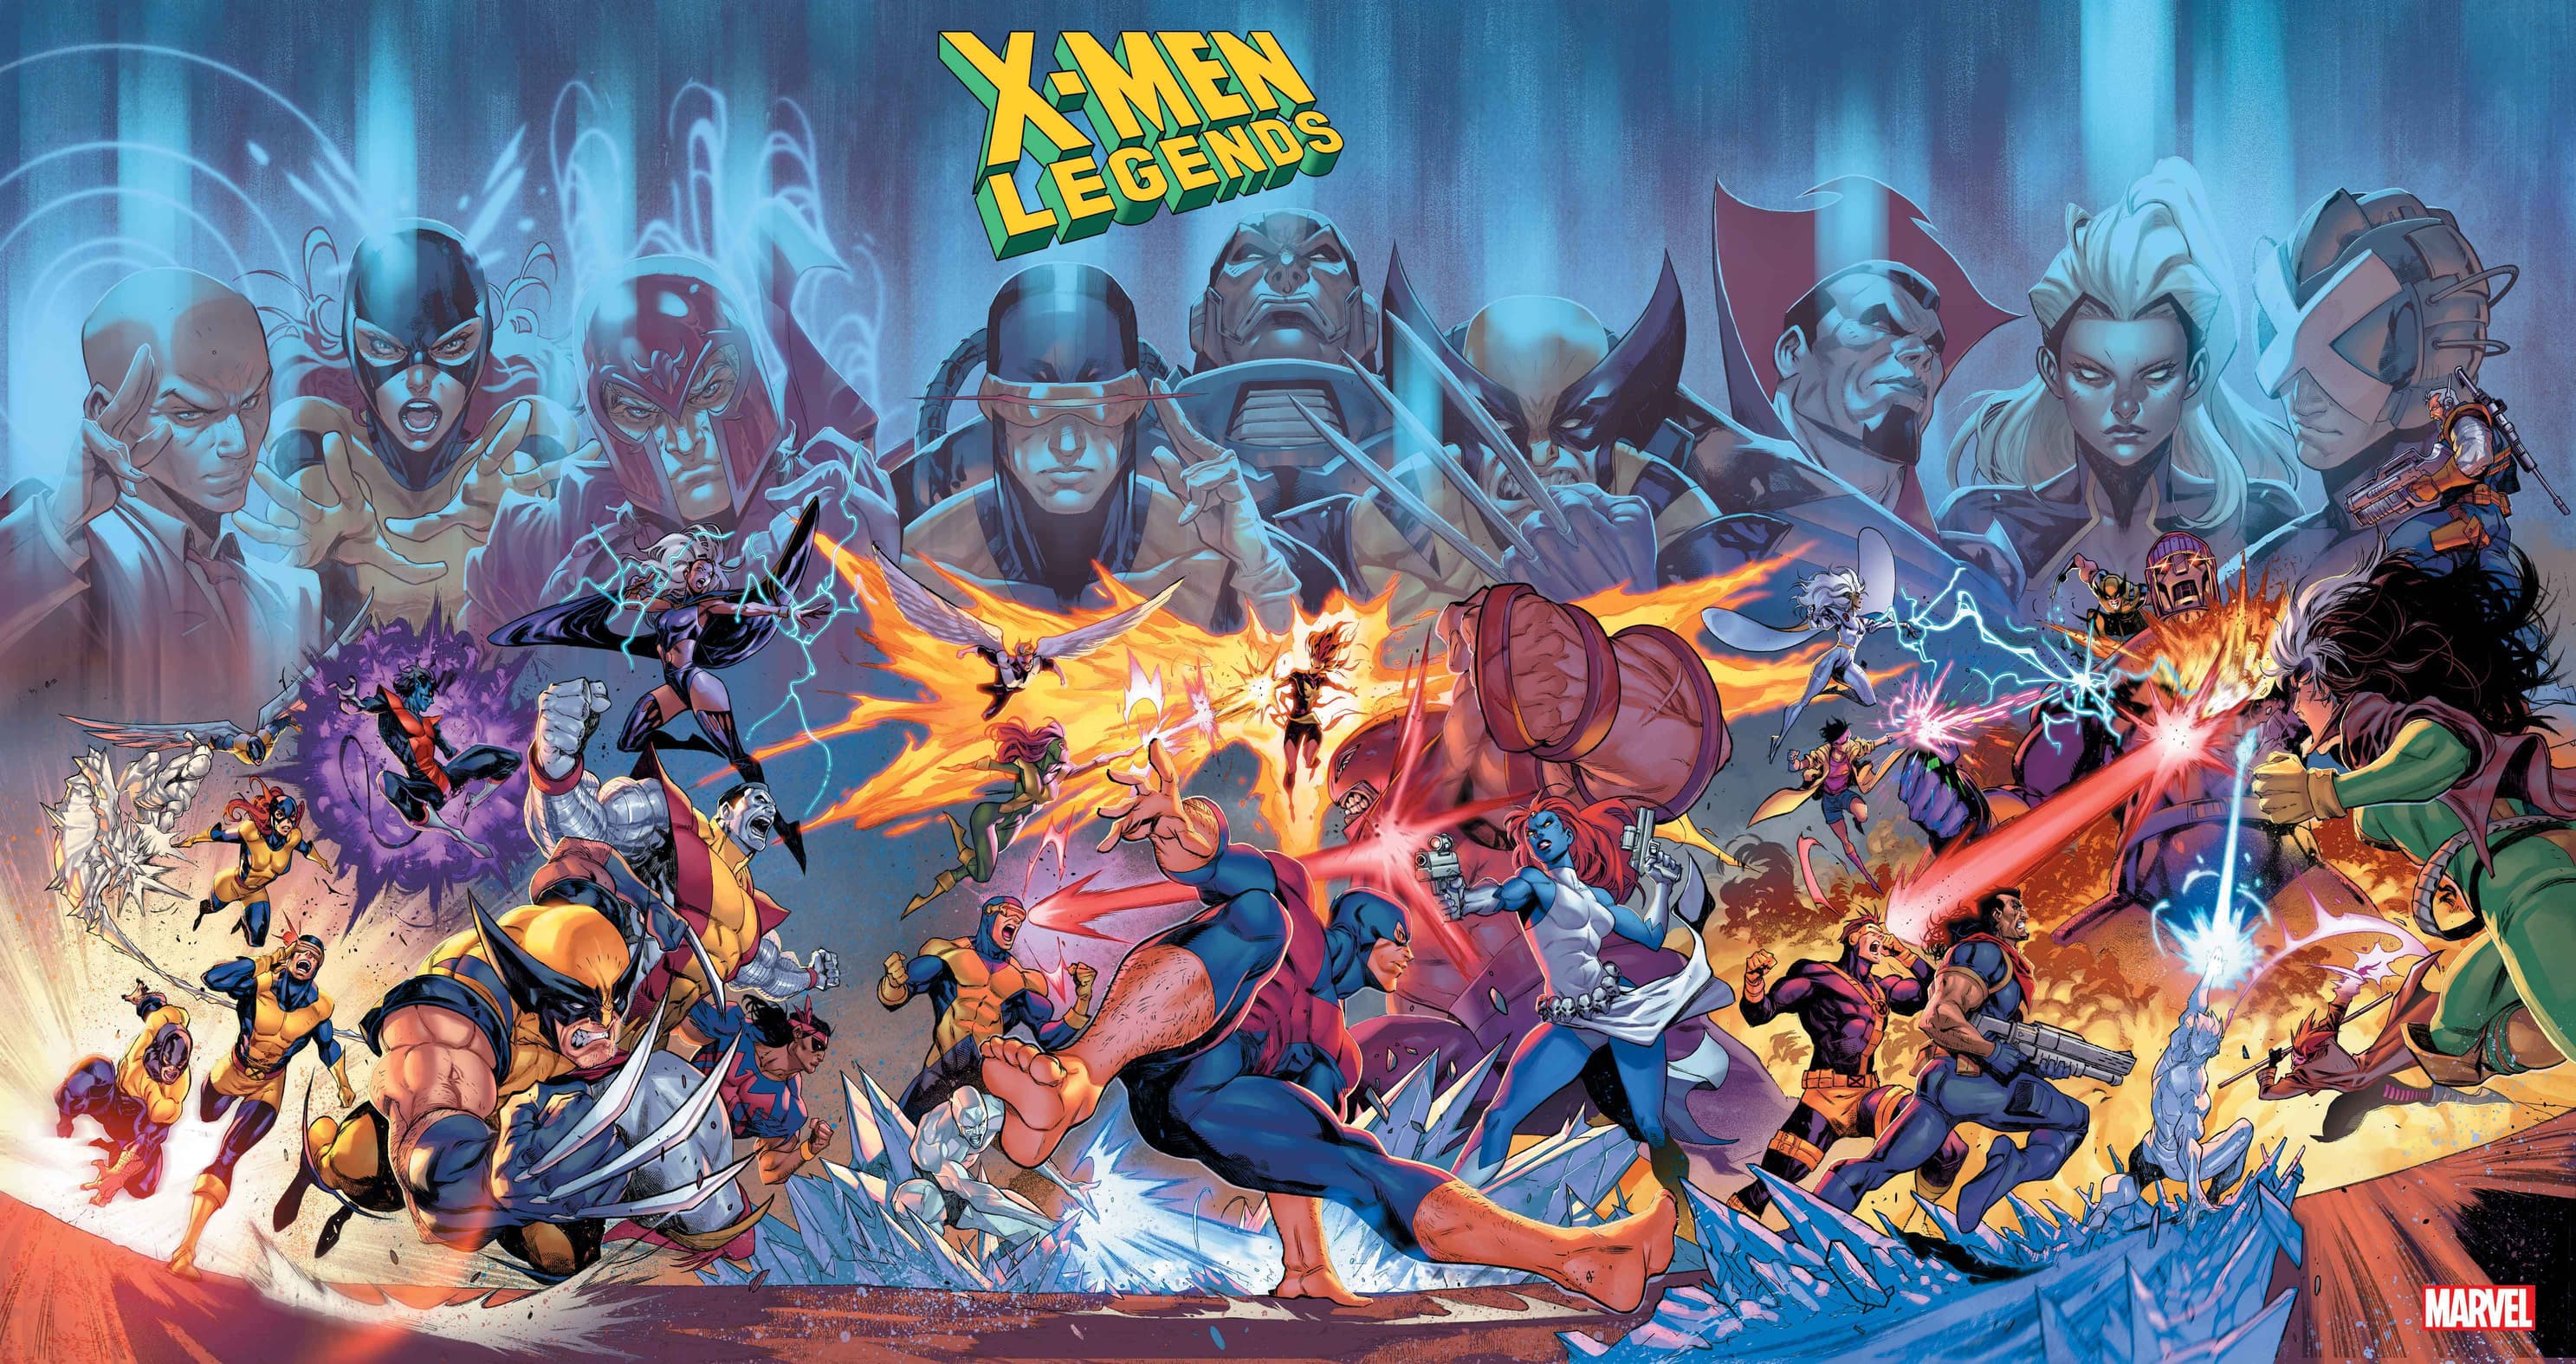 X-Men Legends Iban Coelle variant cover